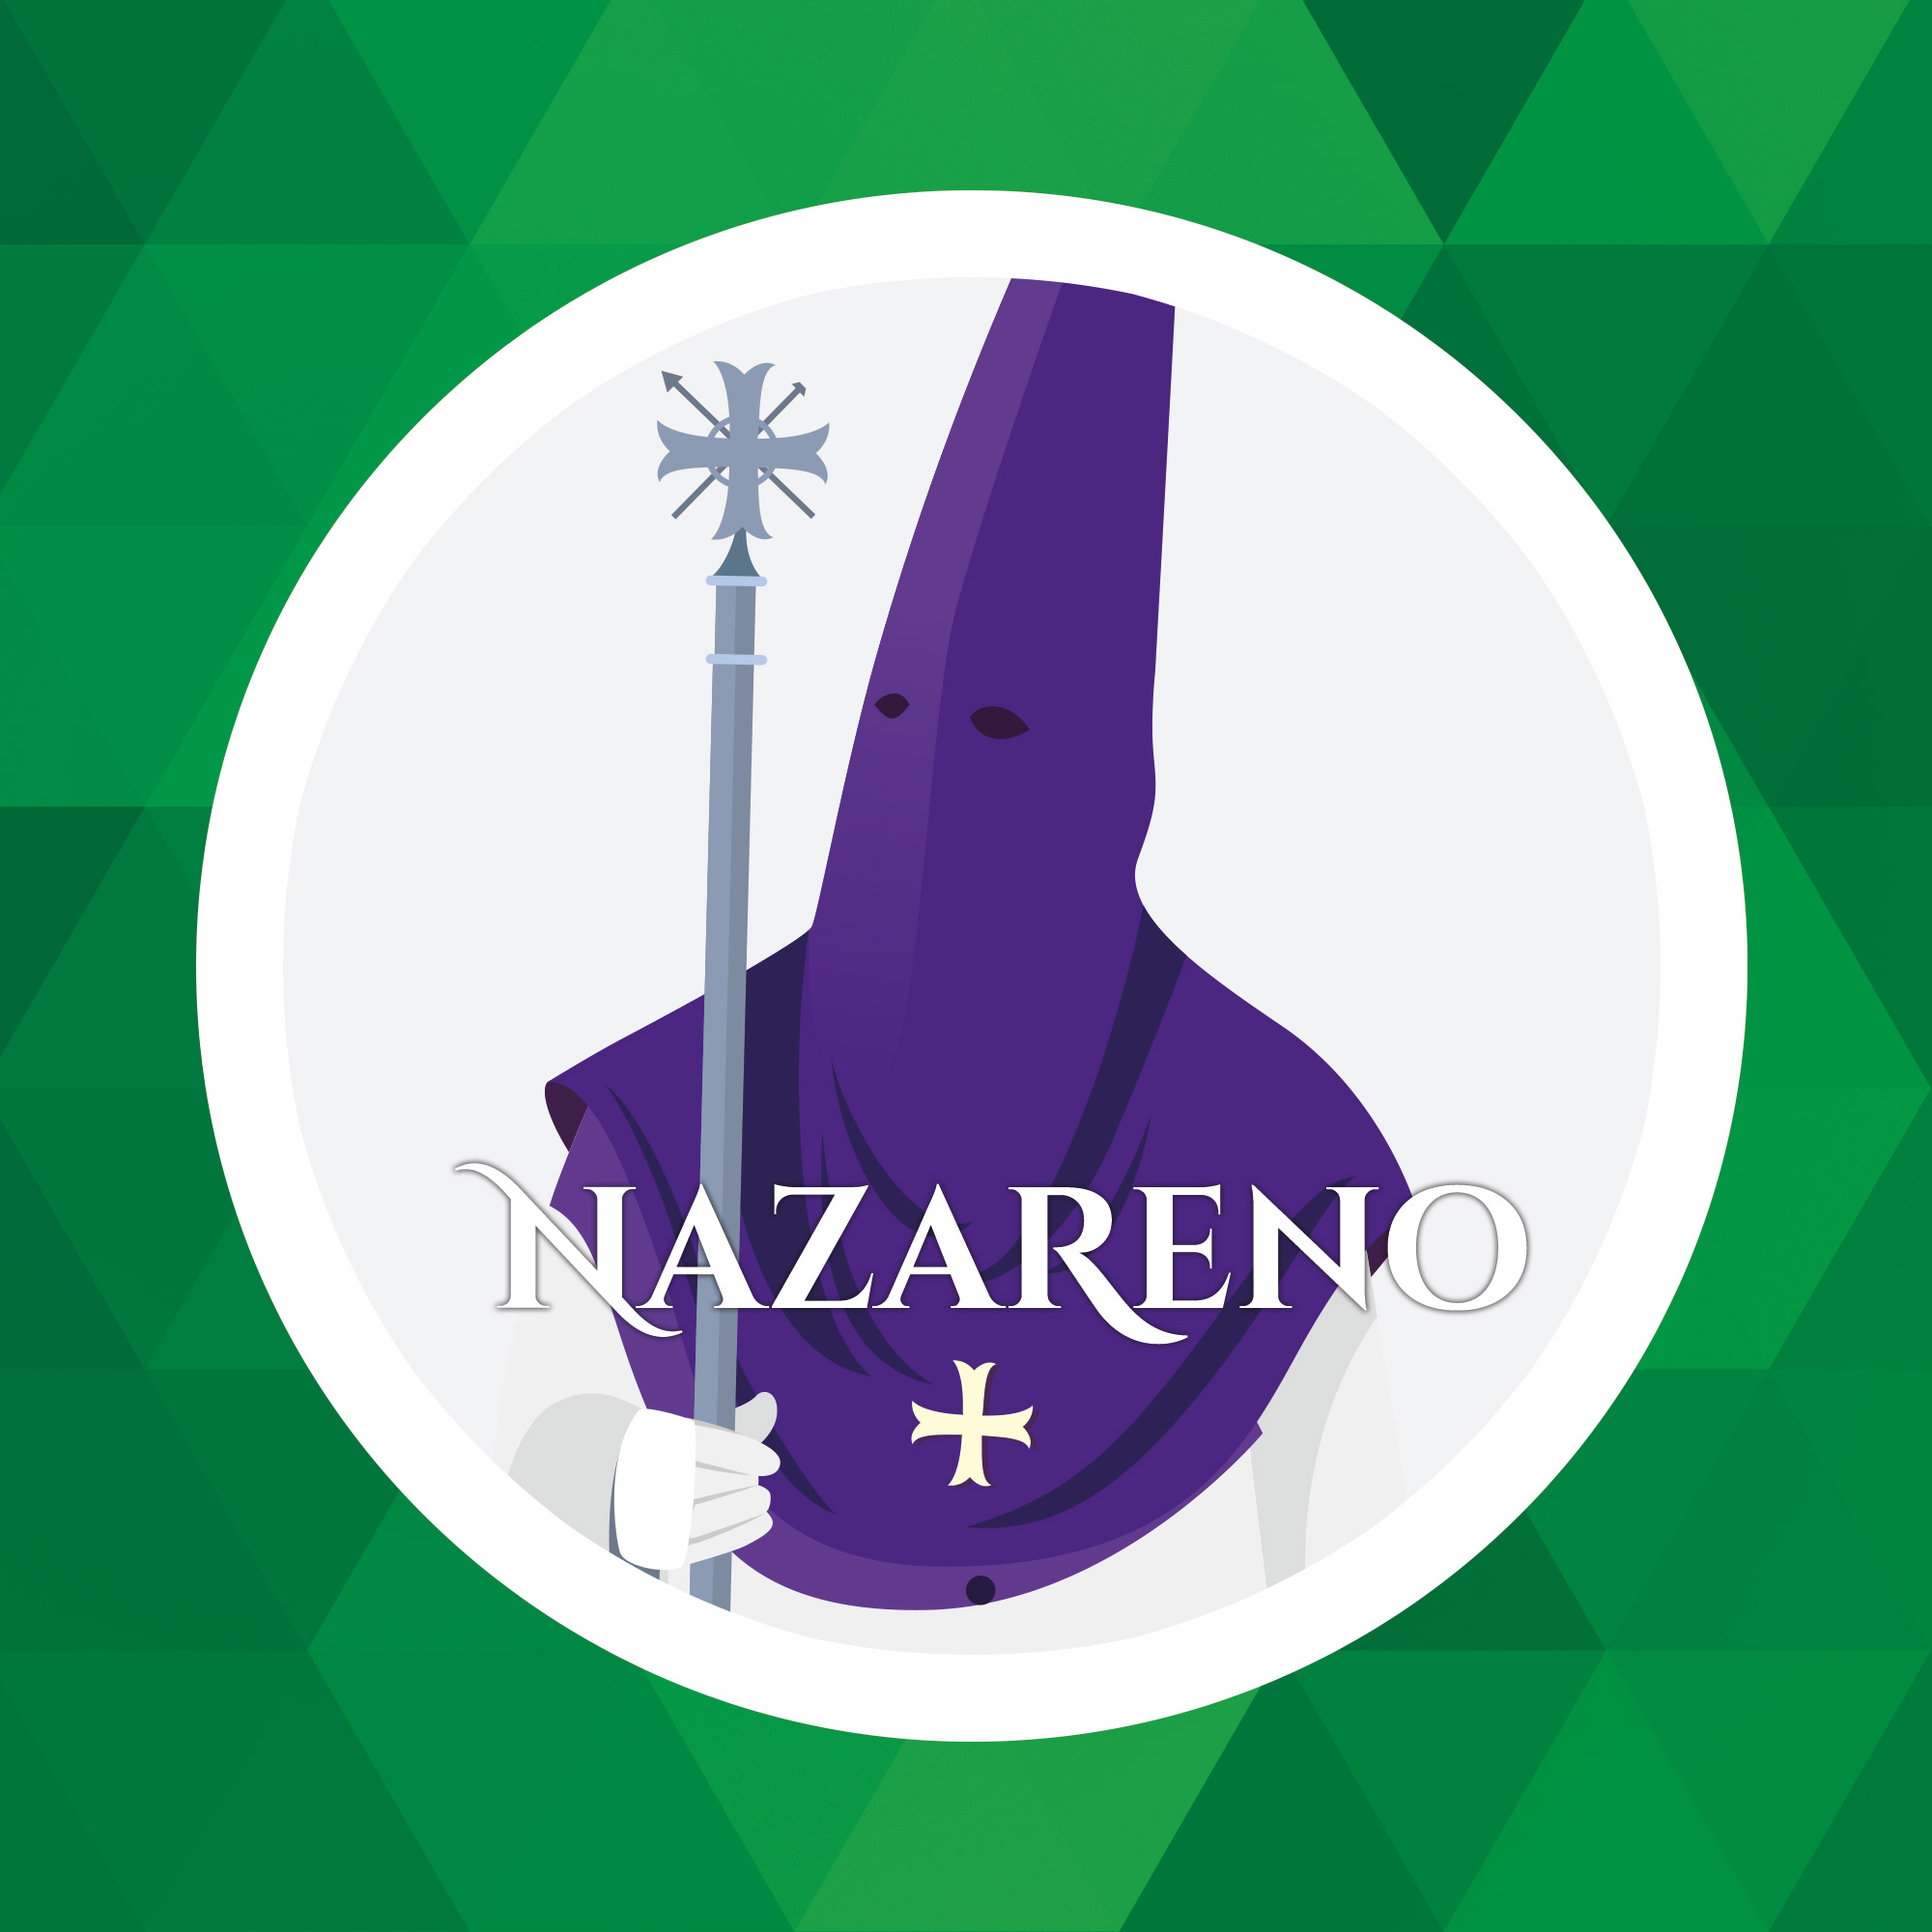 El podcast de Nazareno